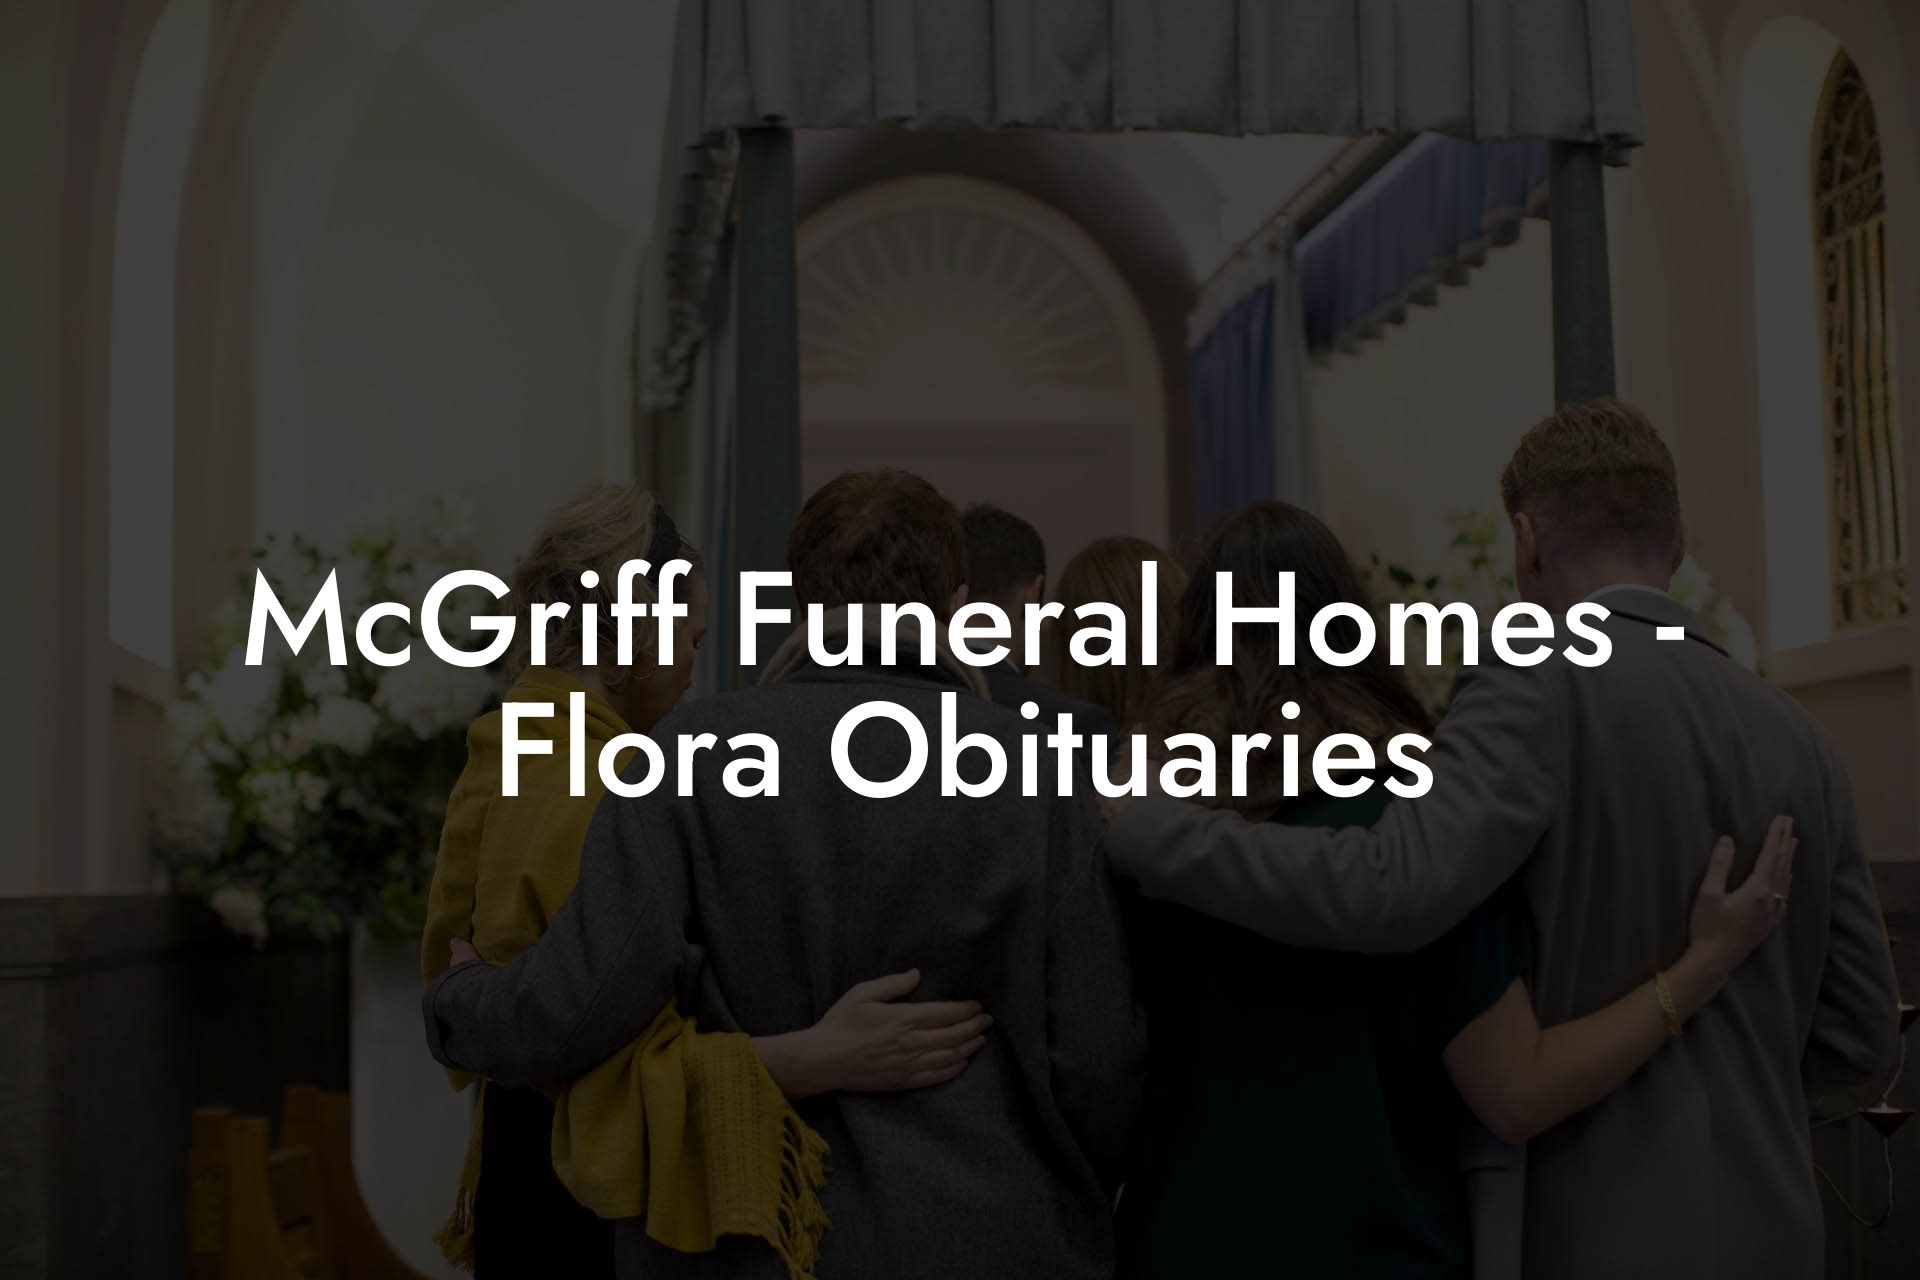 McGriff Funeral Homes - Flora Obituaries